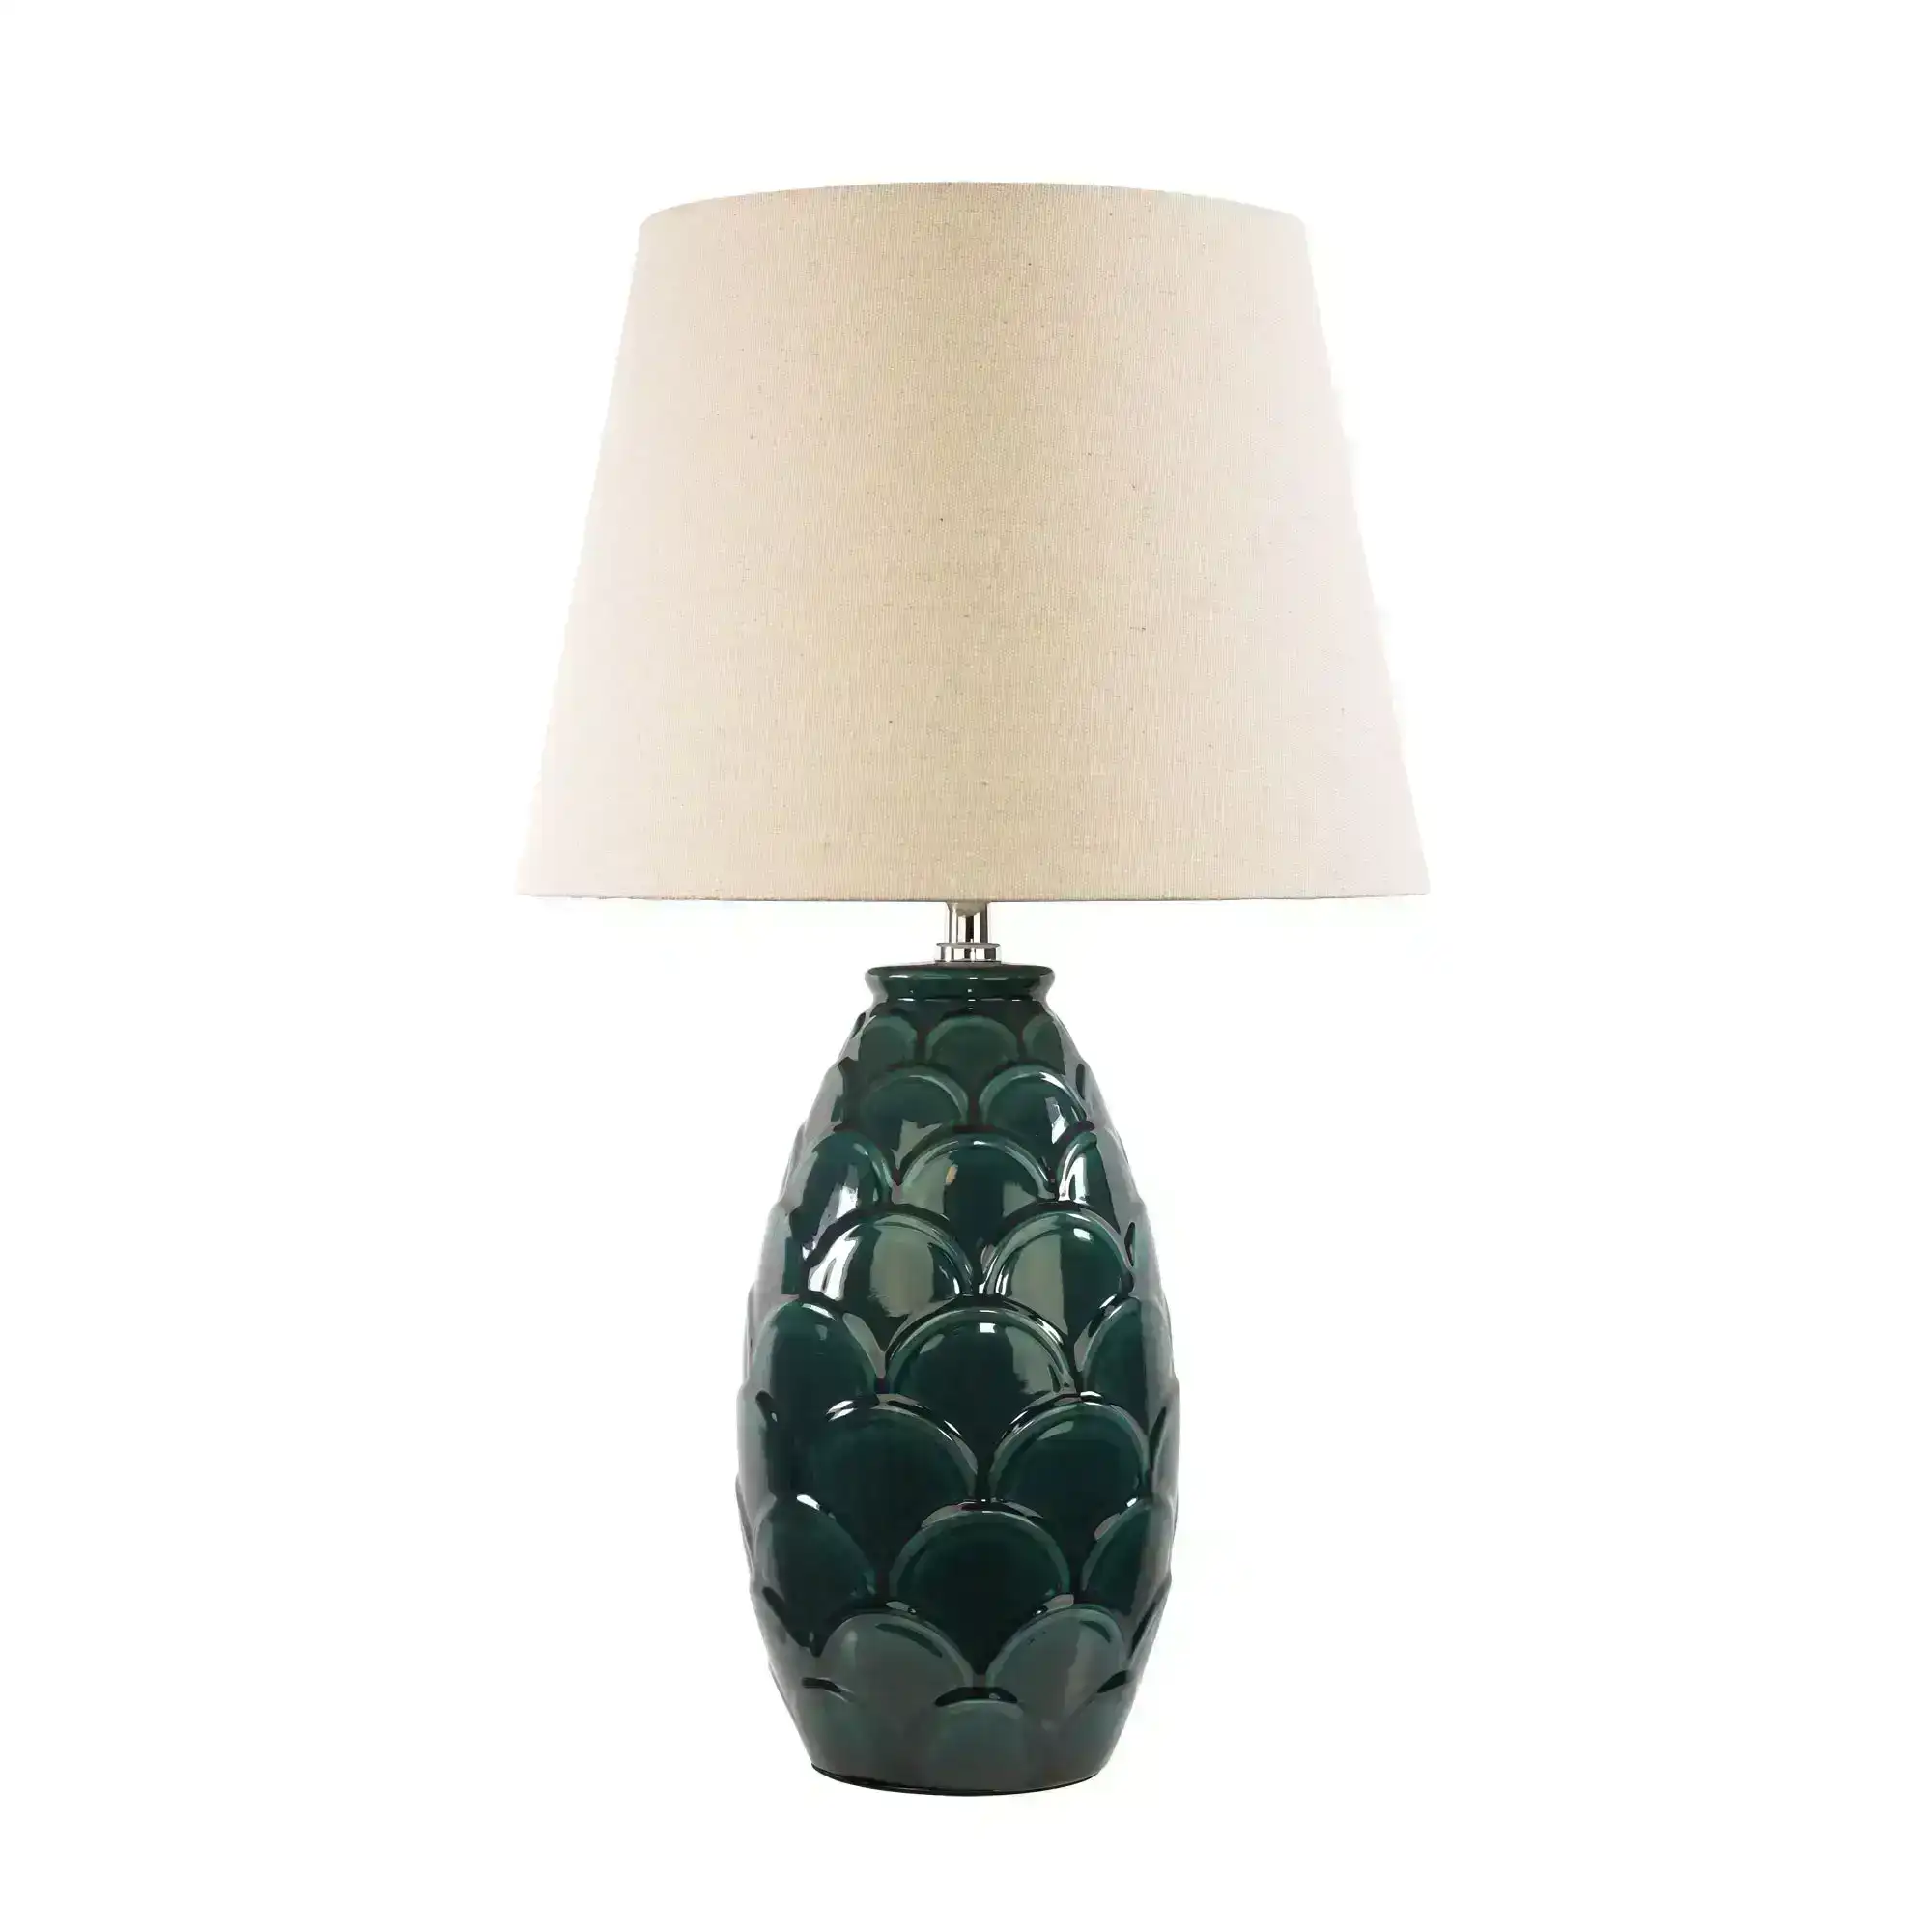 DELPHIN Ceramic Table Lamp